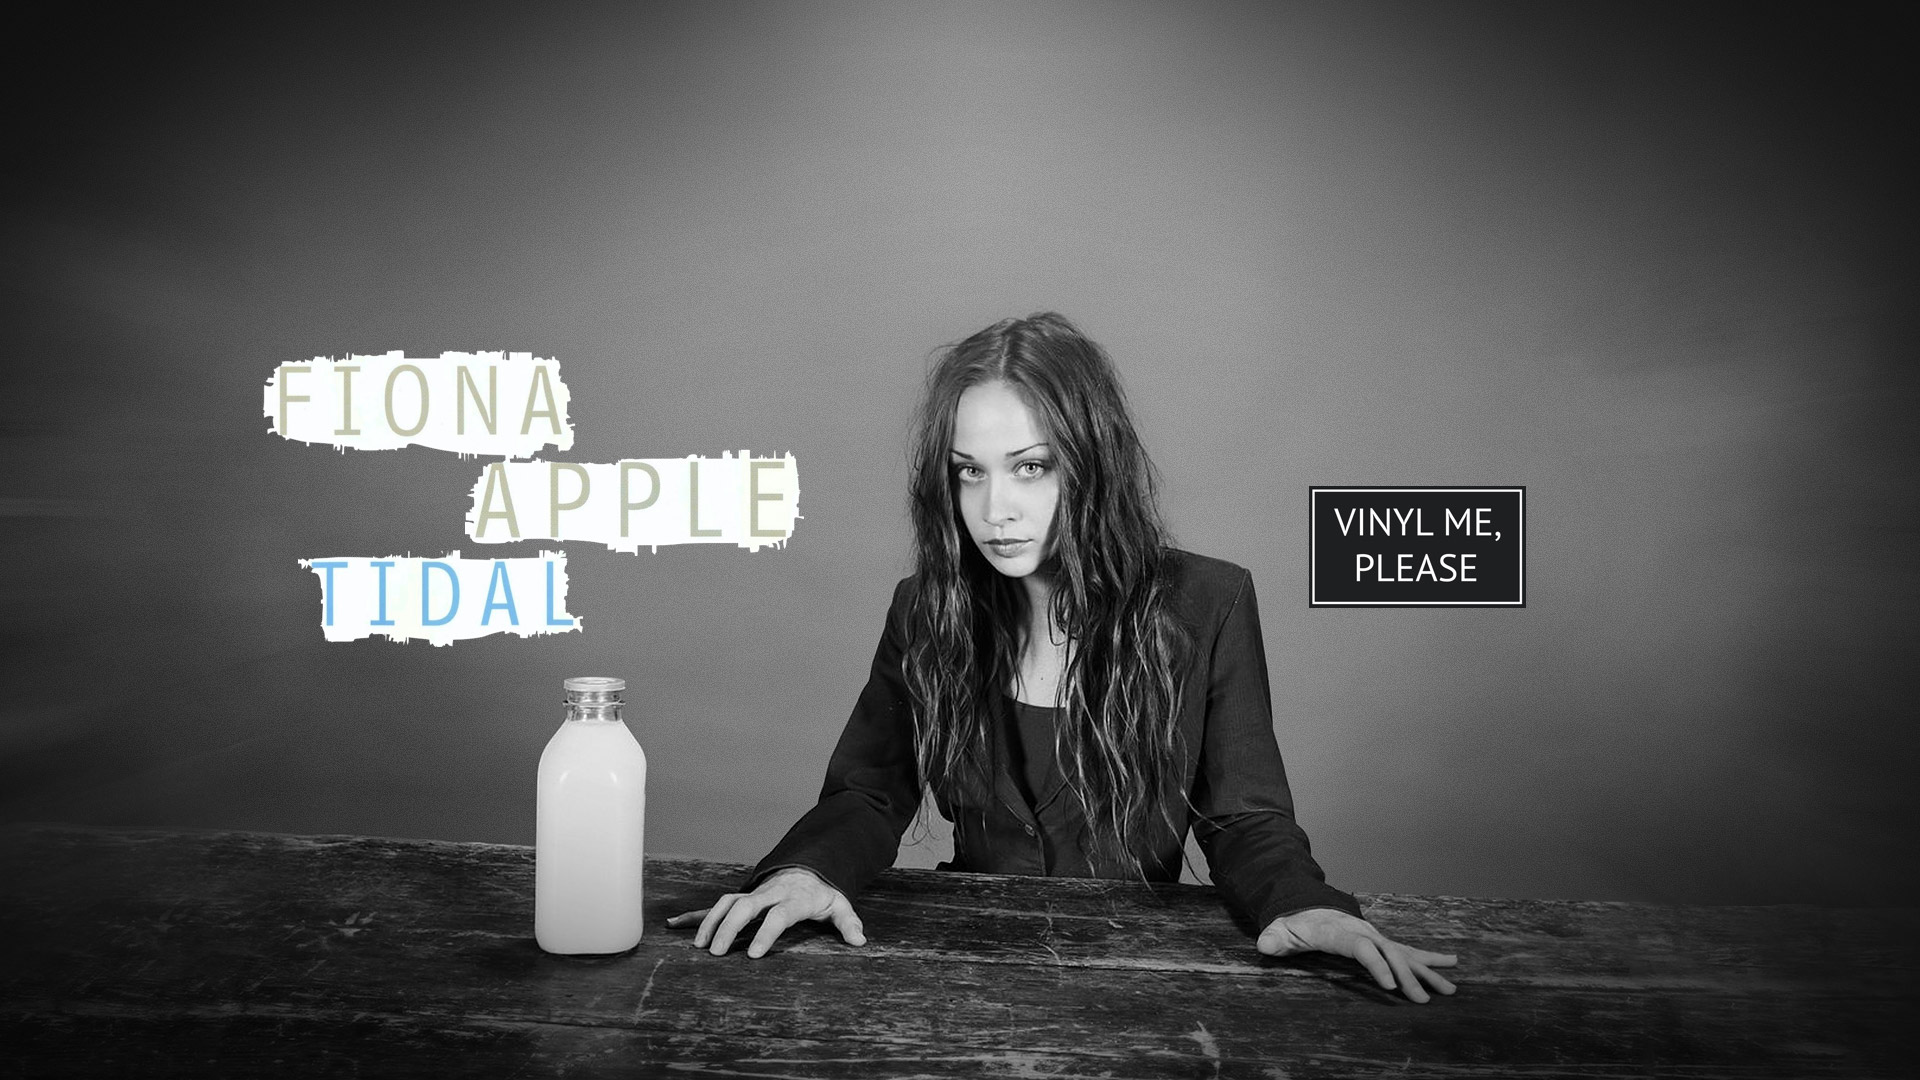 Vinyl me, please may edition: fiona apple ‘tidal’